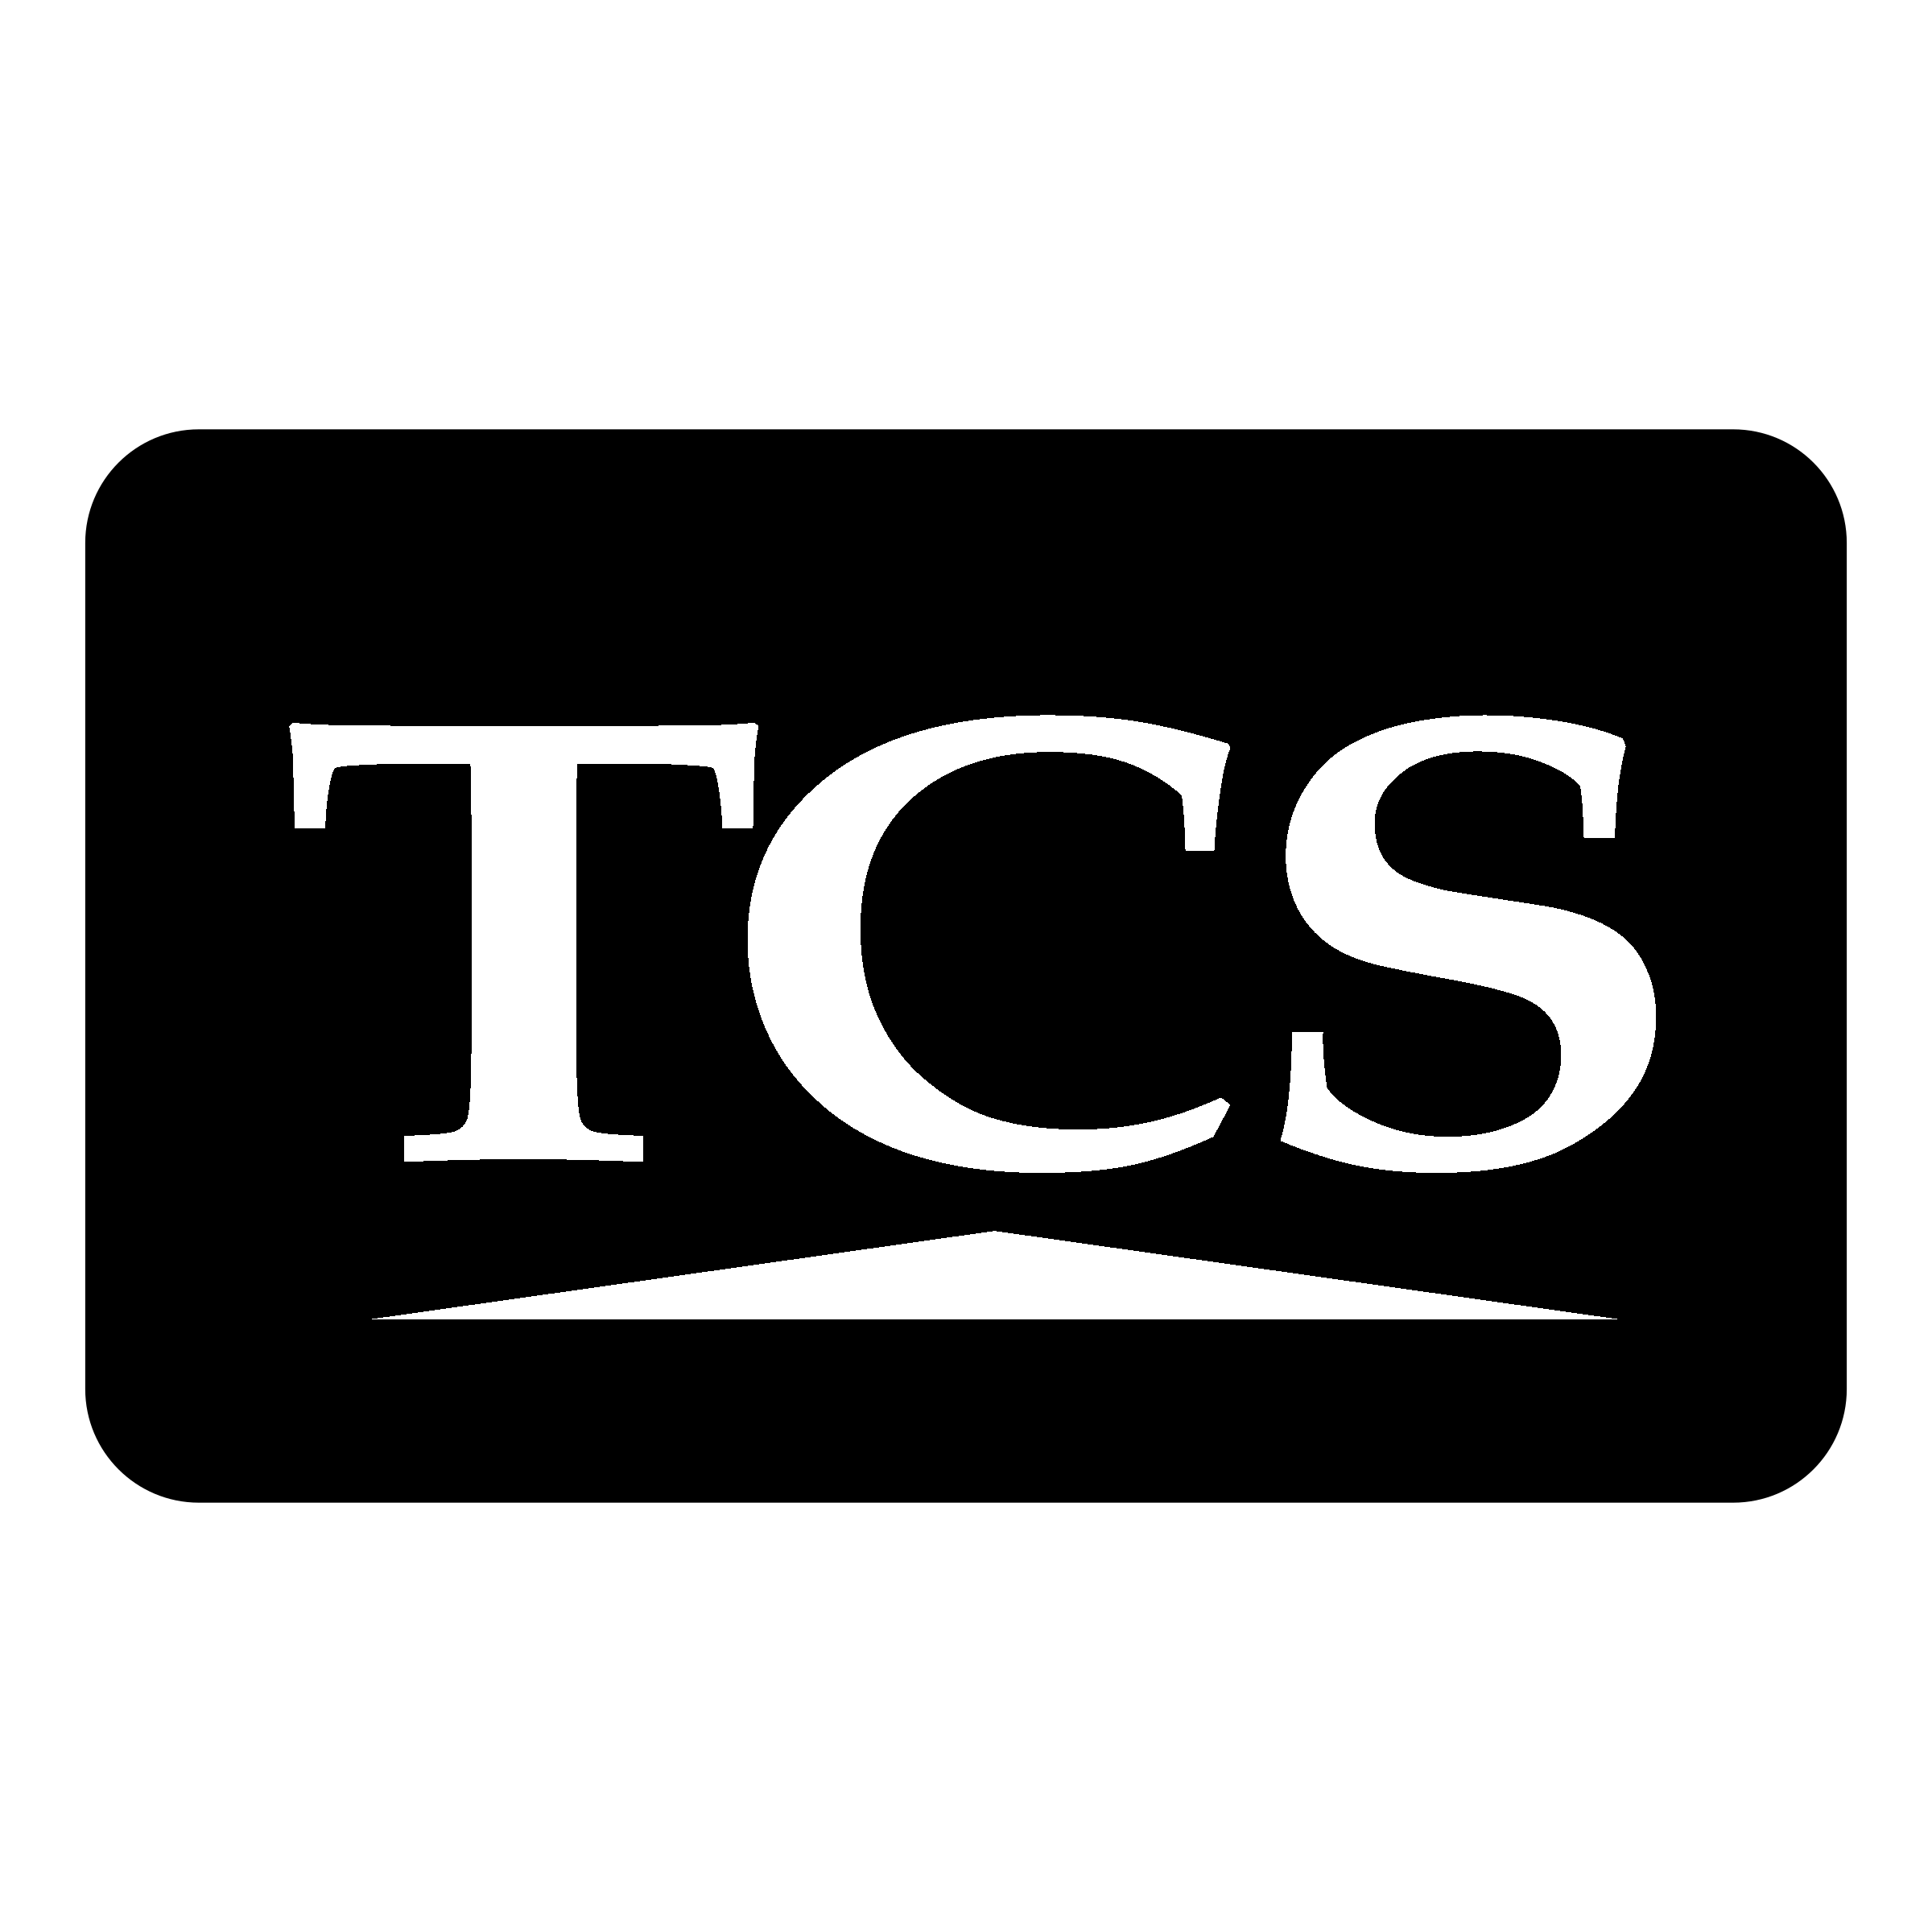 TCS Logo - TCS Logo PNG Transparent & SVG Vector - Freebie Supply